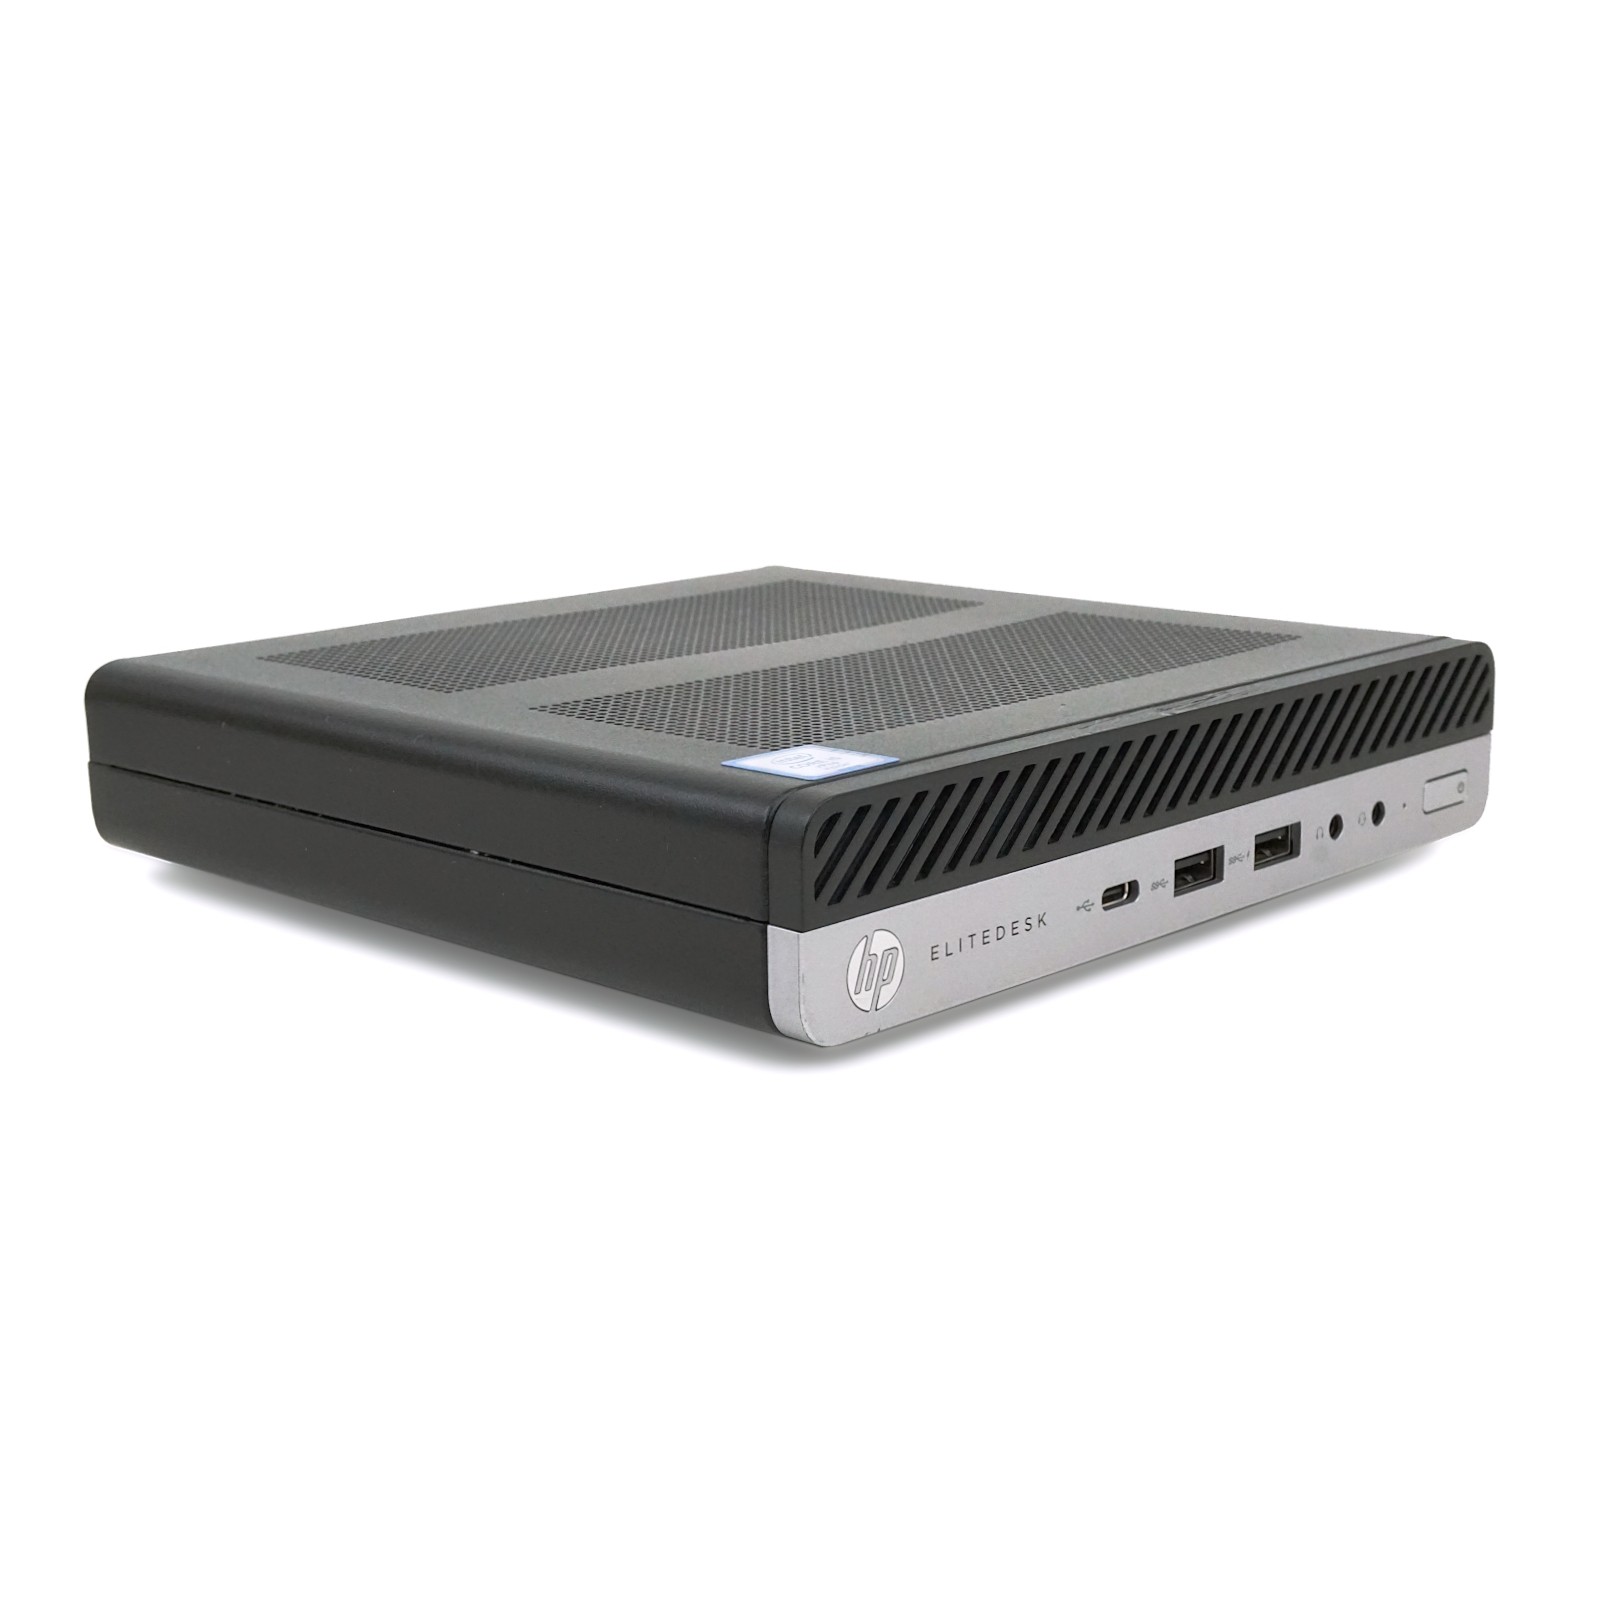 Hp Elitedesk 800 G3 Mini Desktop Pc Configure To Order